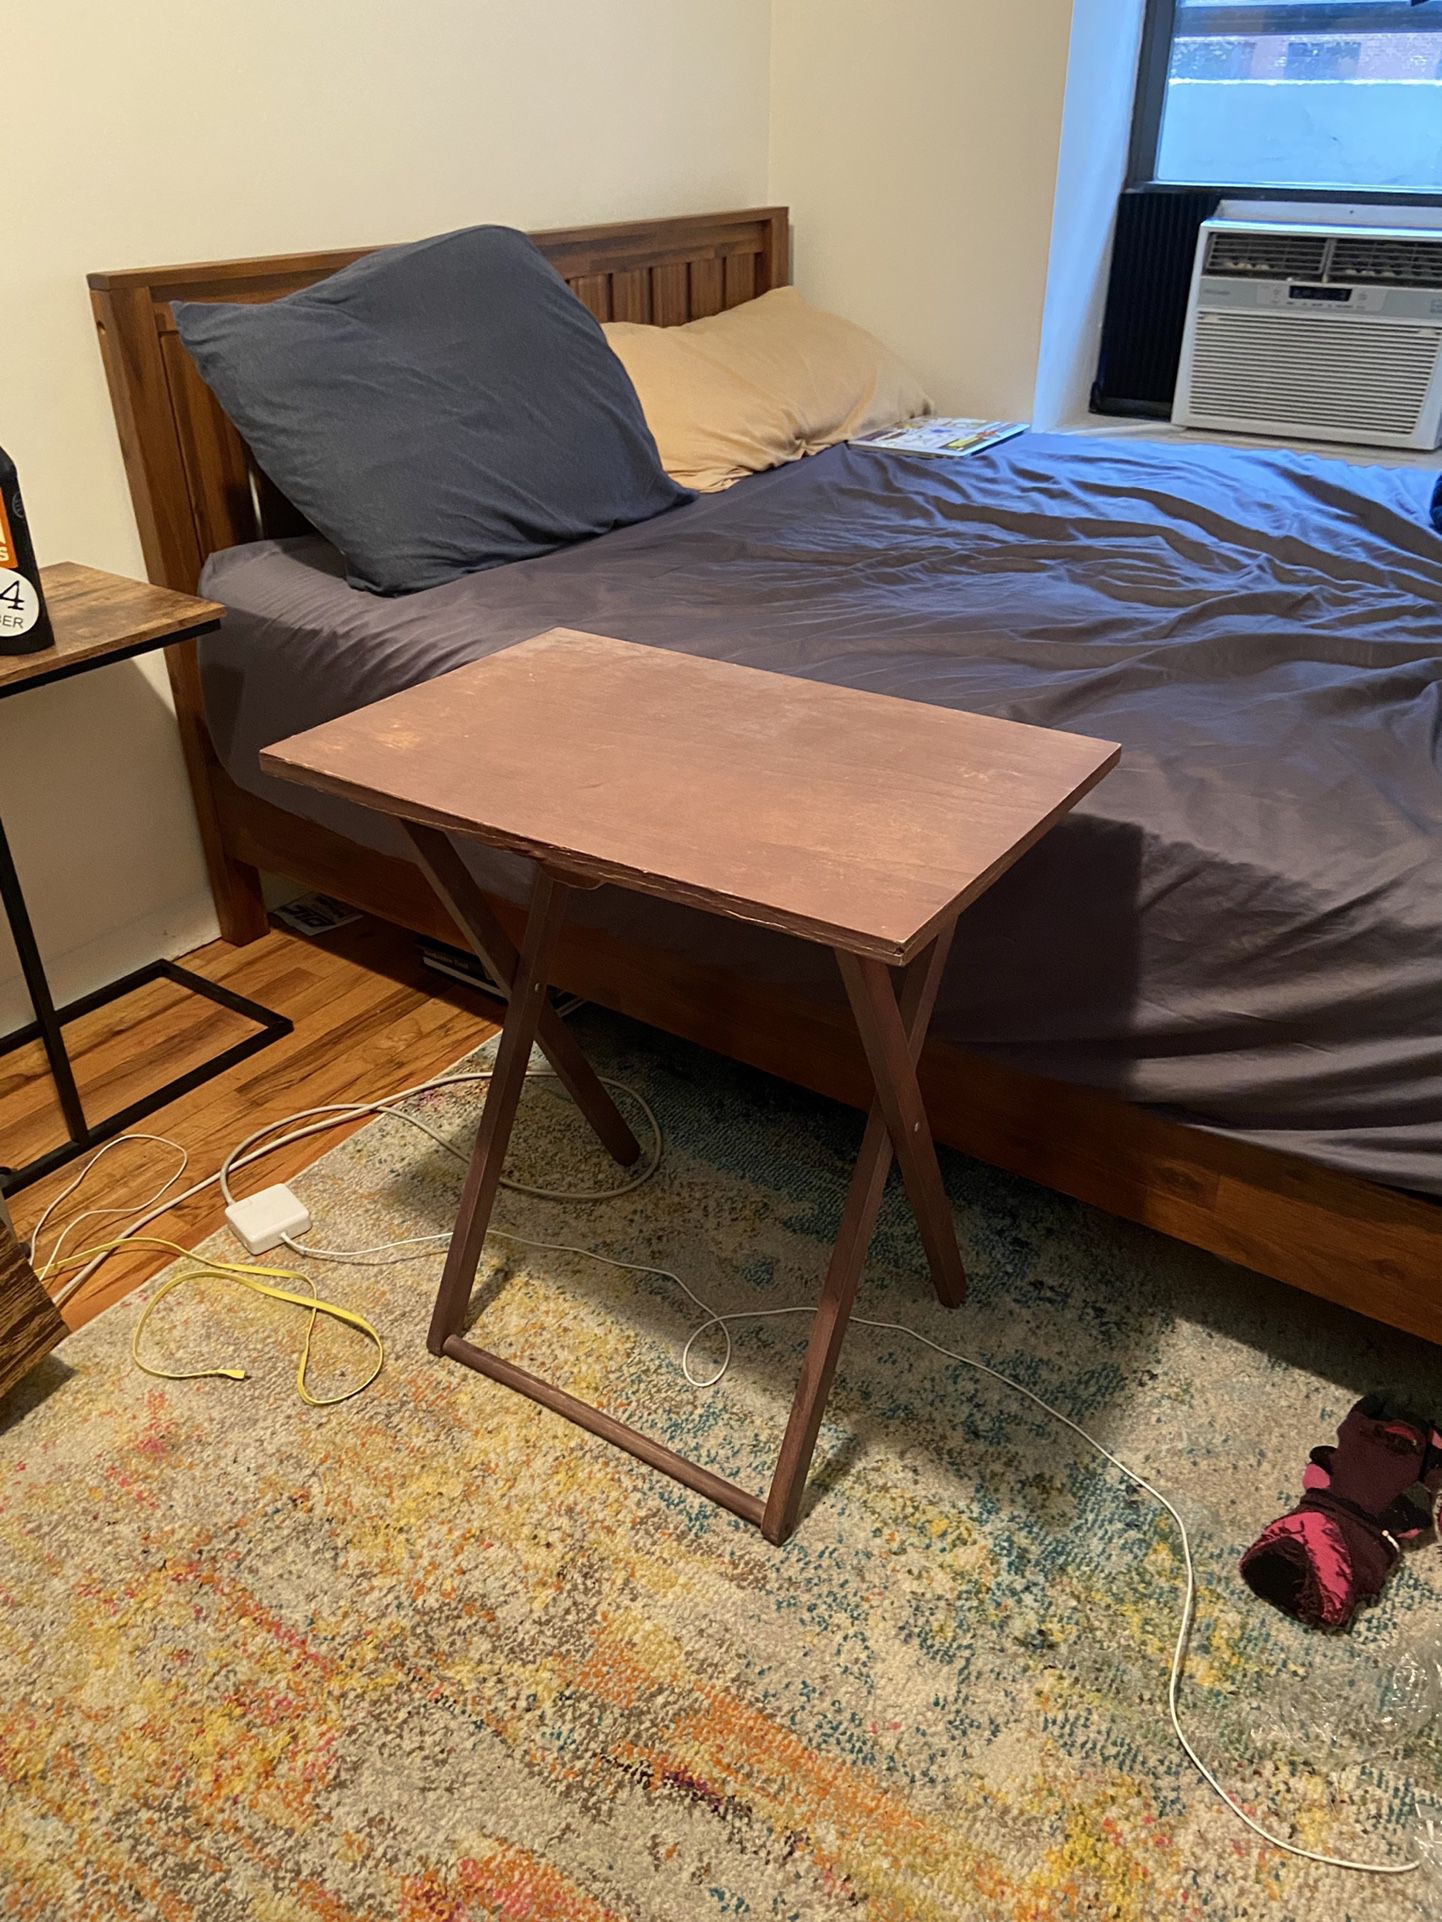 Bedside Table — Wood finish & foldable